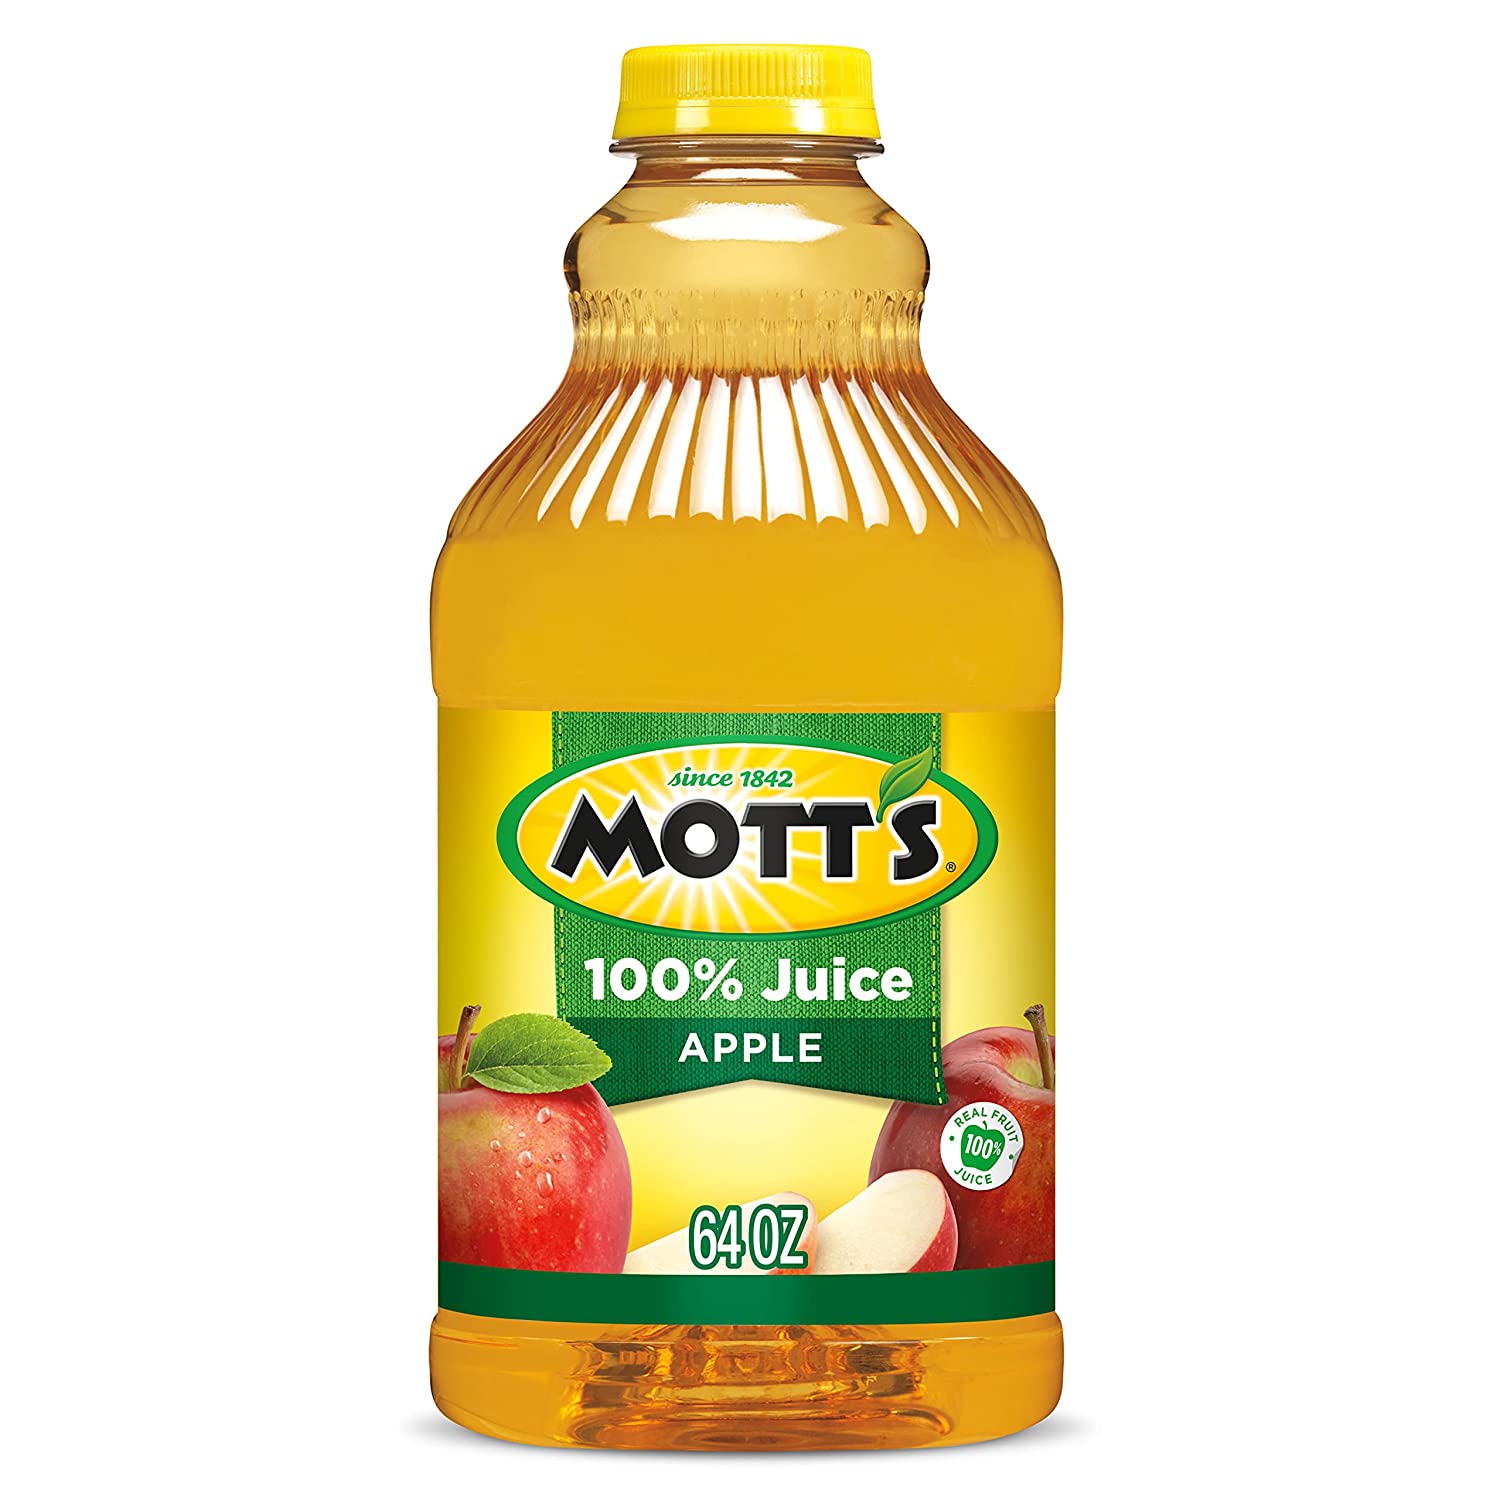 Mott's Original Apple 100% Juice, 64 Fluid Ounce Bottle